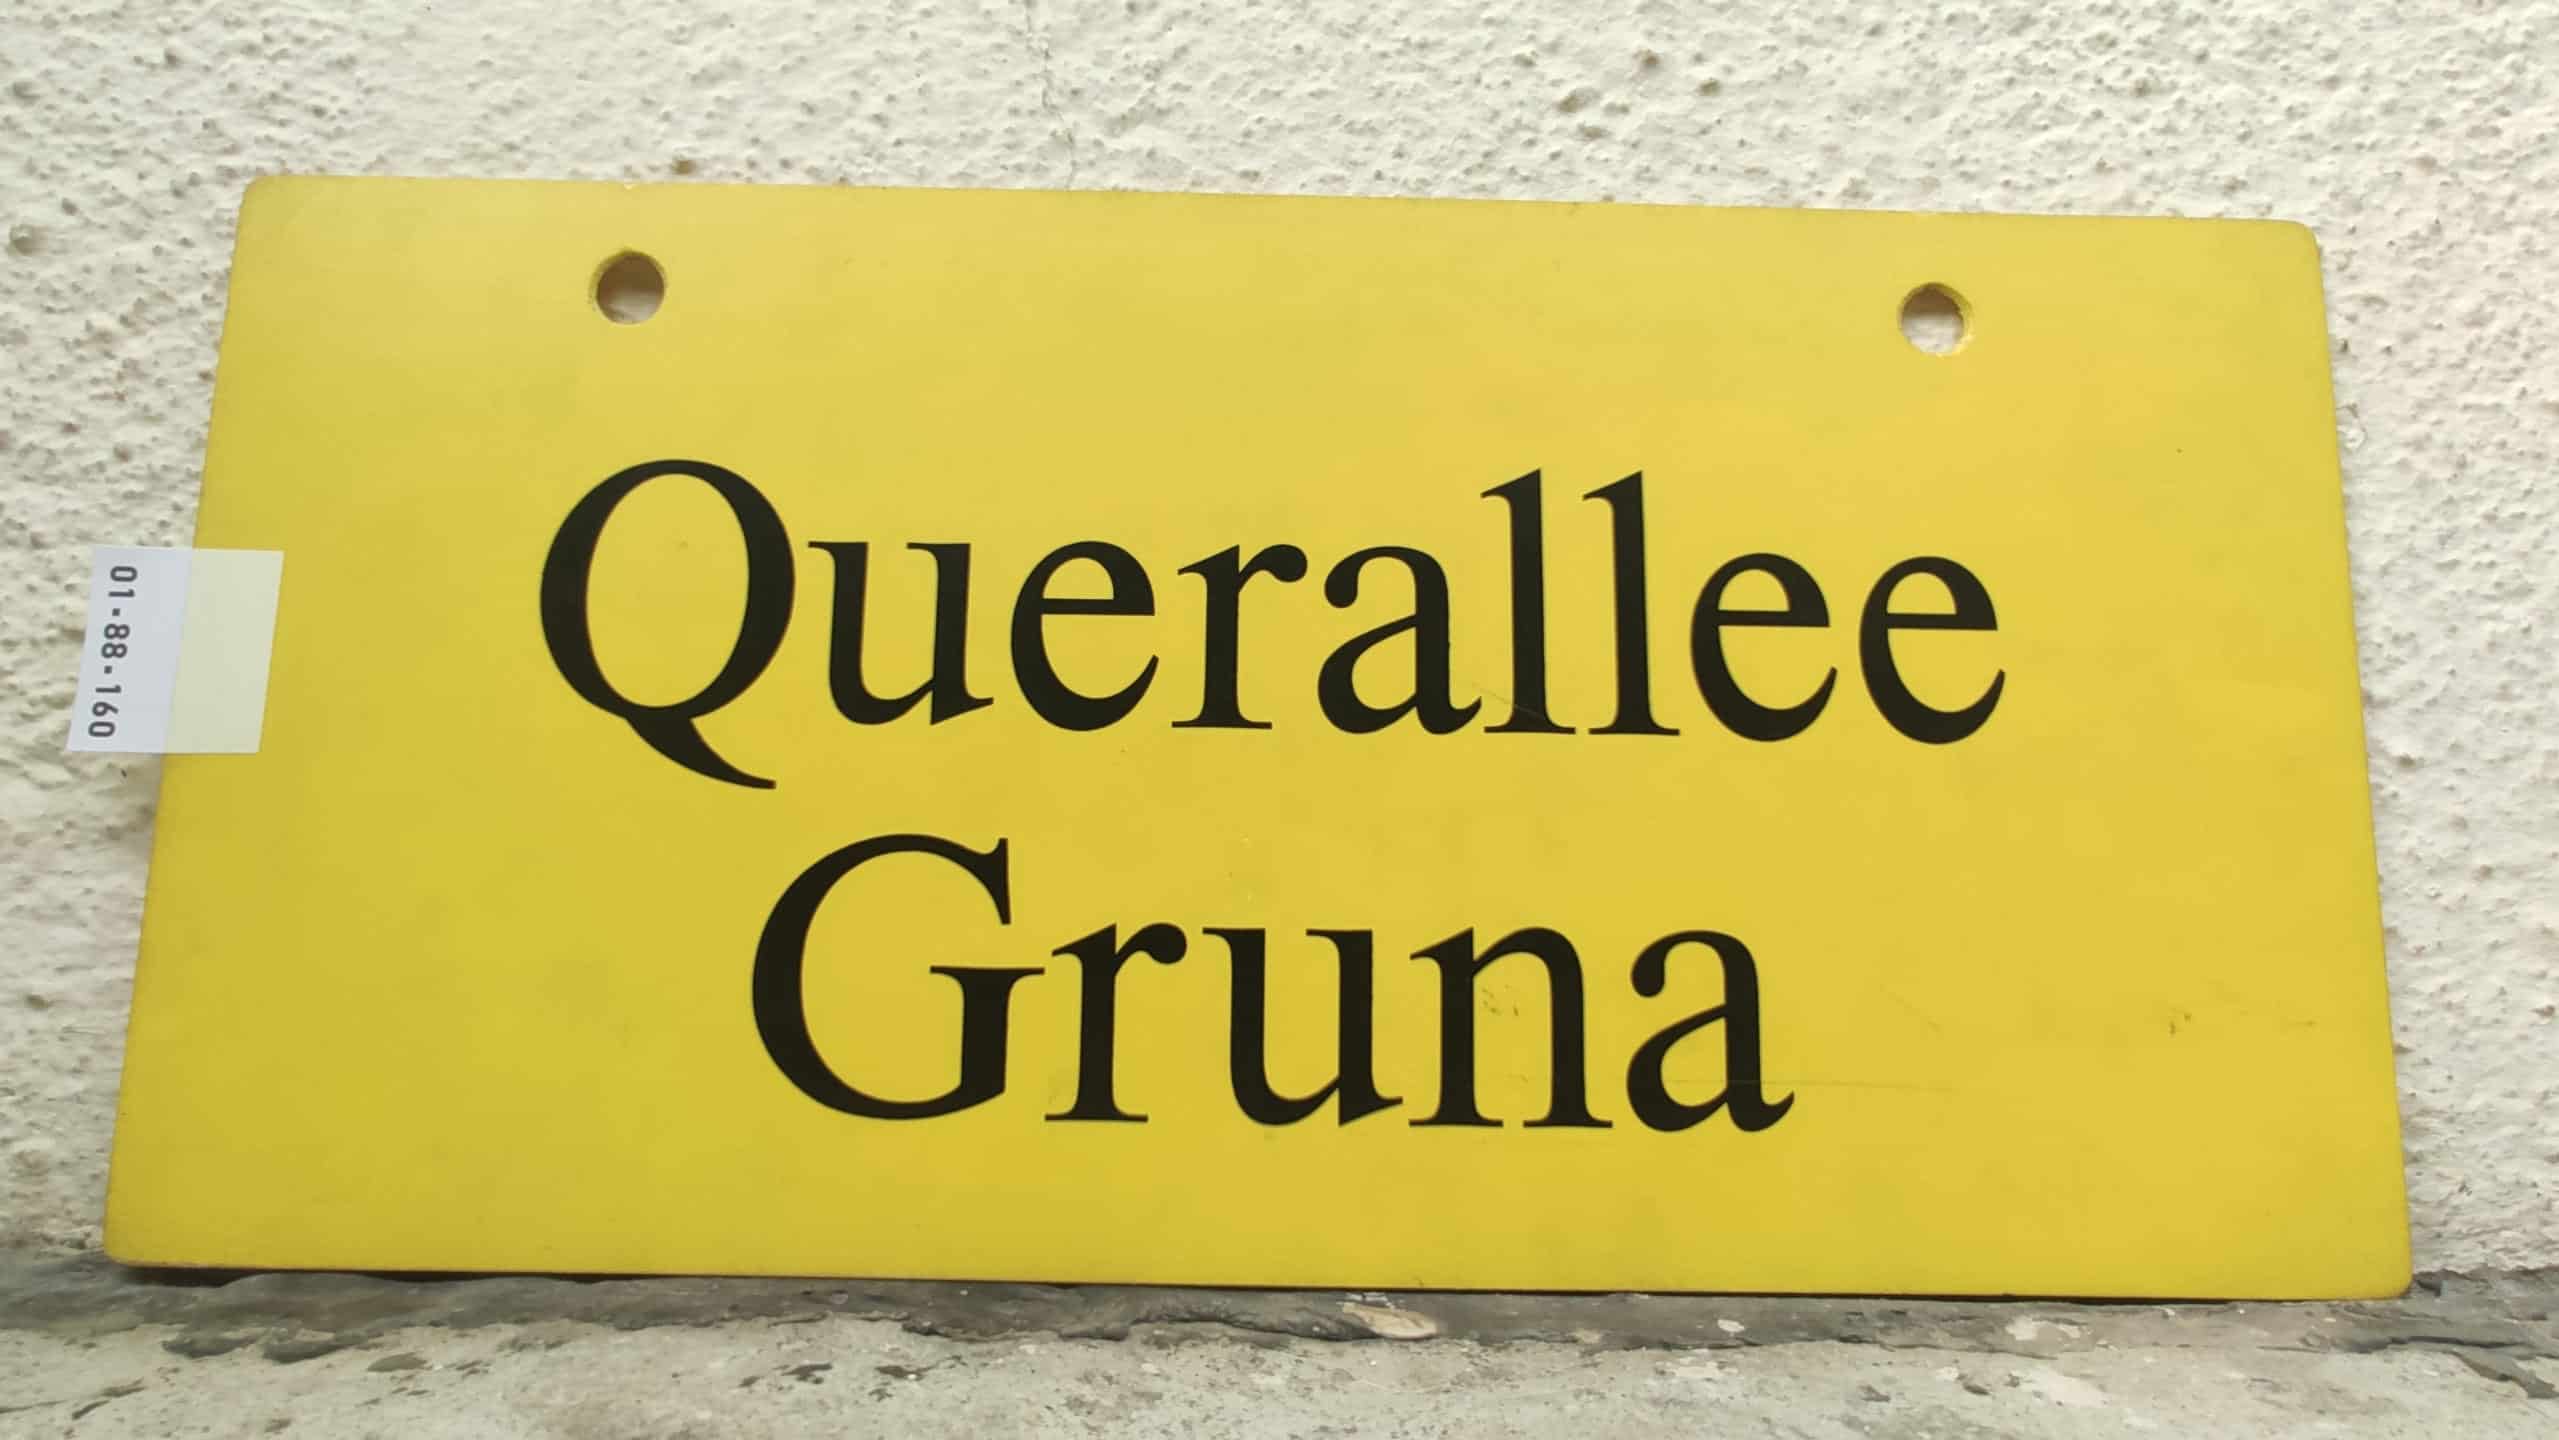 Querallee Gruna